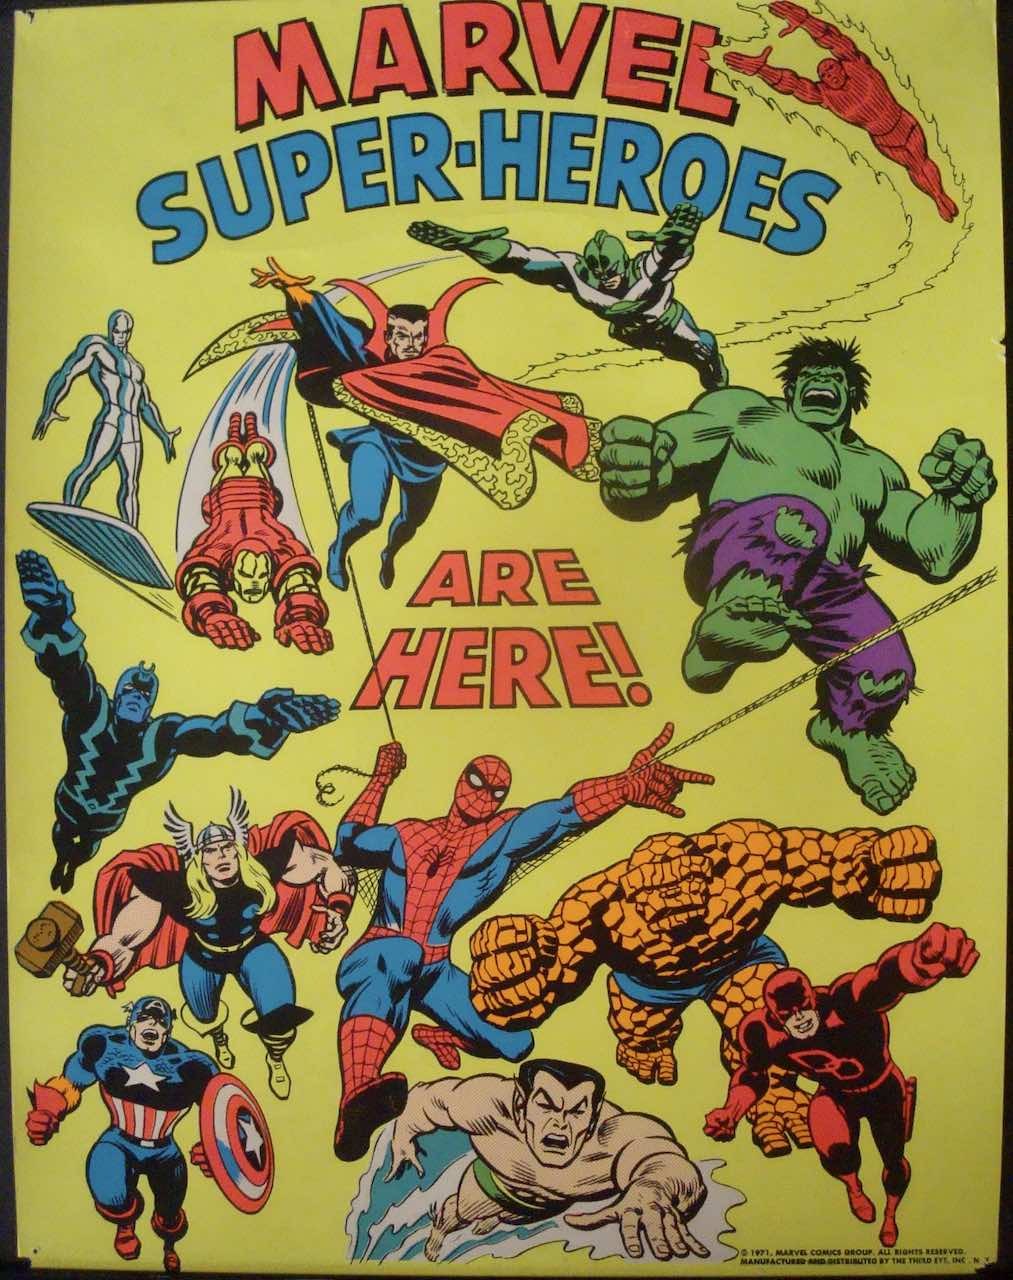 Marvel Super-Heroes Are Here (Marvel Black light poster)